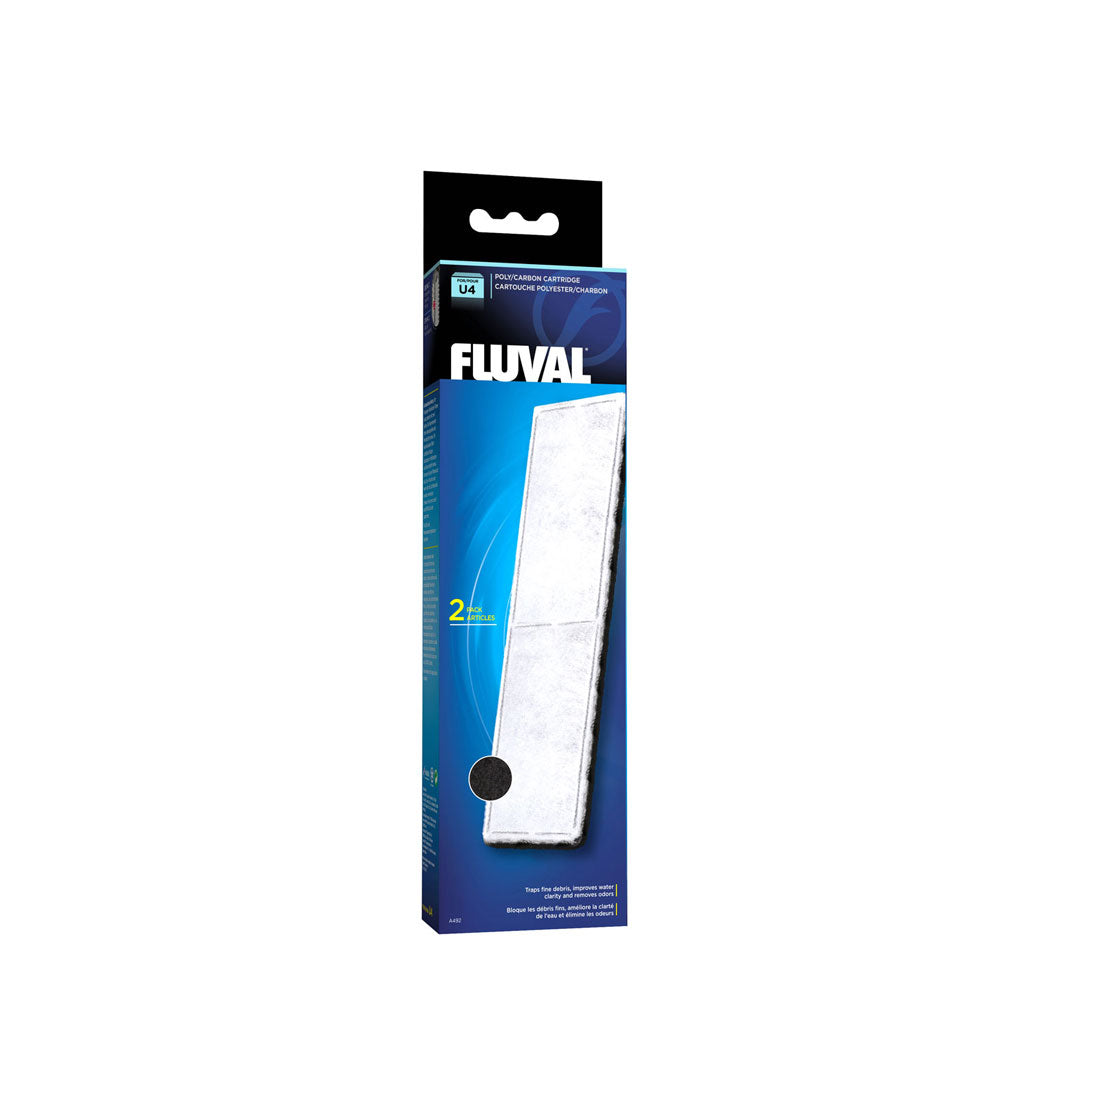 Fluval U4 Poly Carbon Cartridge